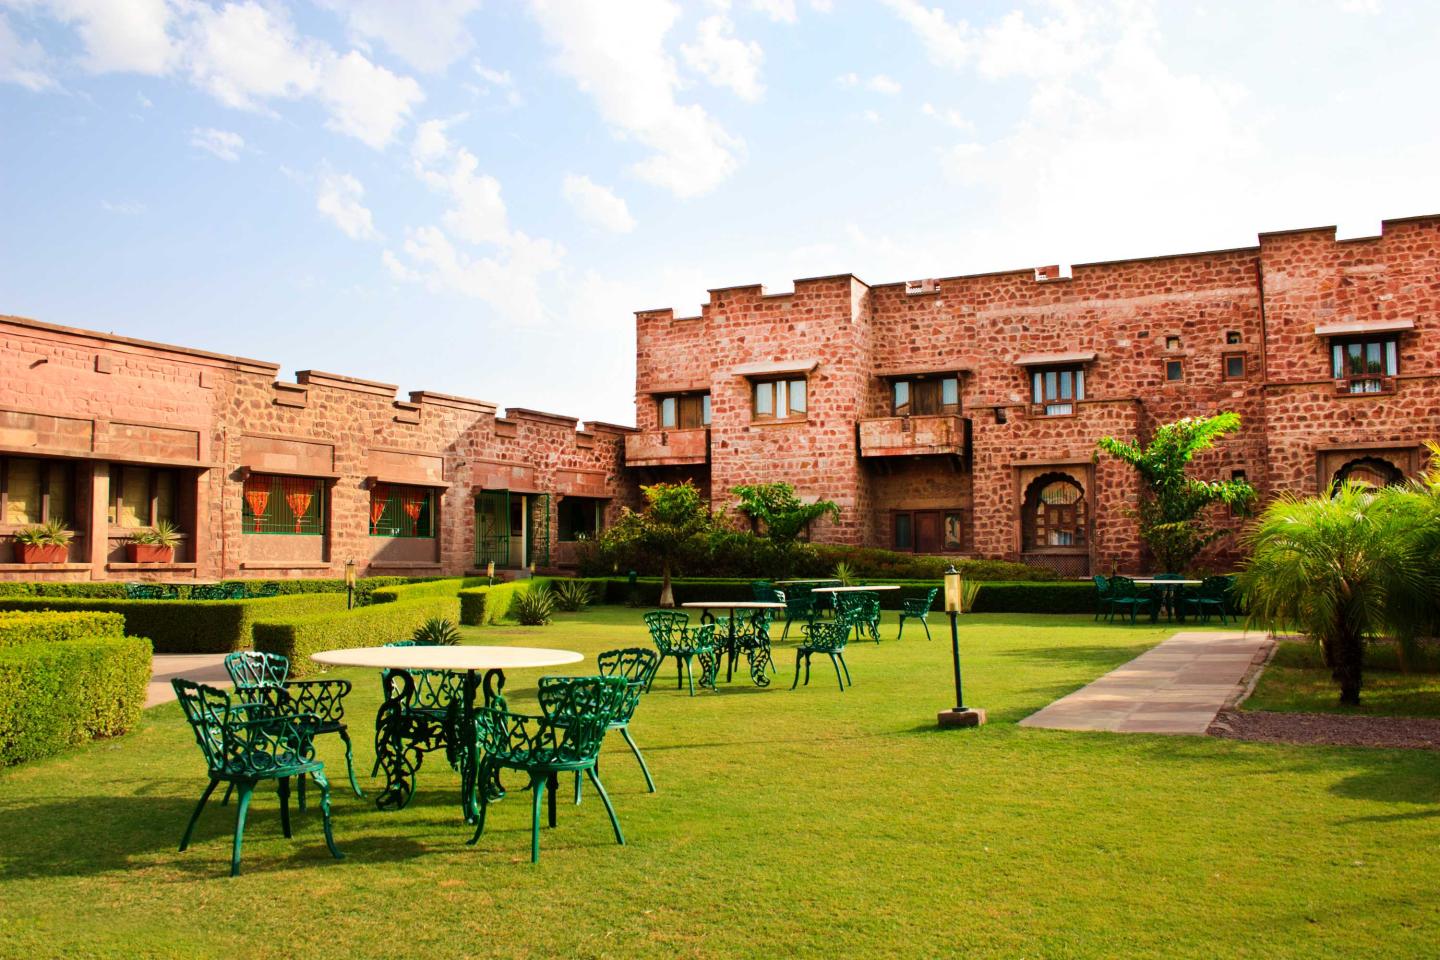 Bijolai Palace heritage hotels in jodhpur